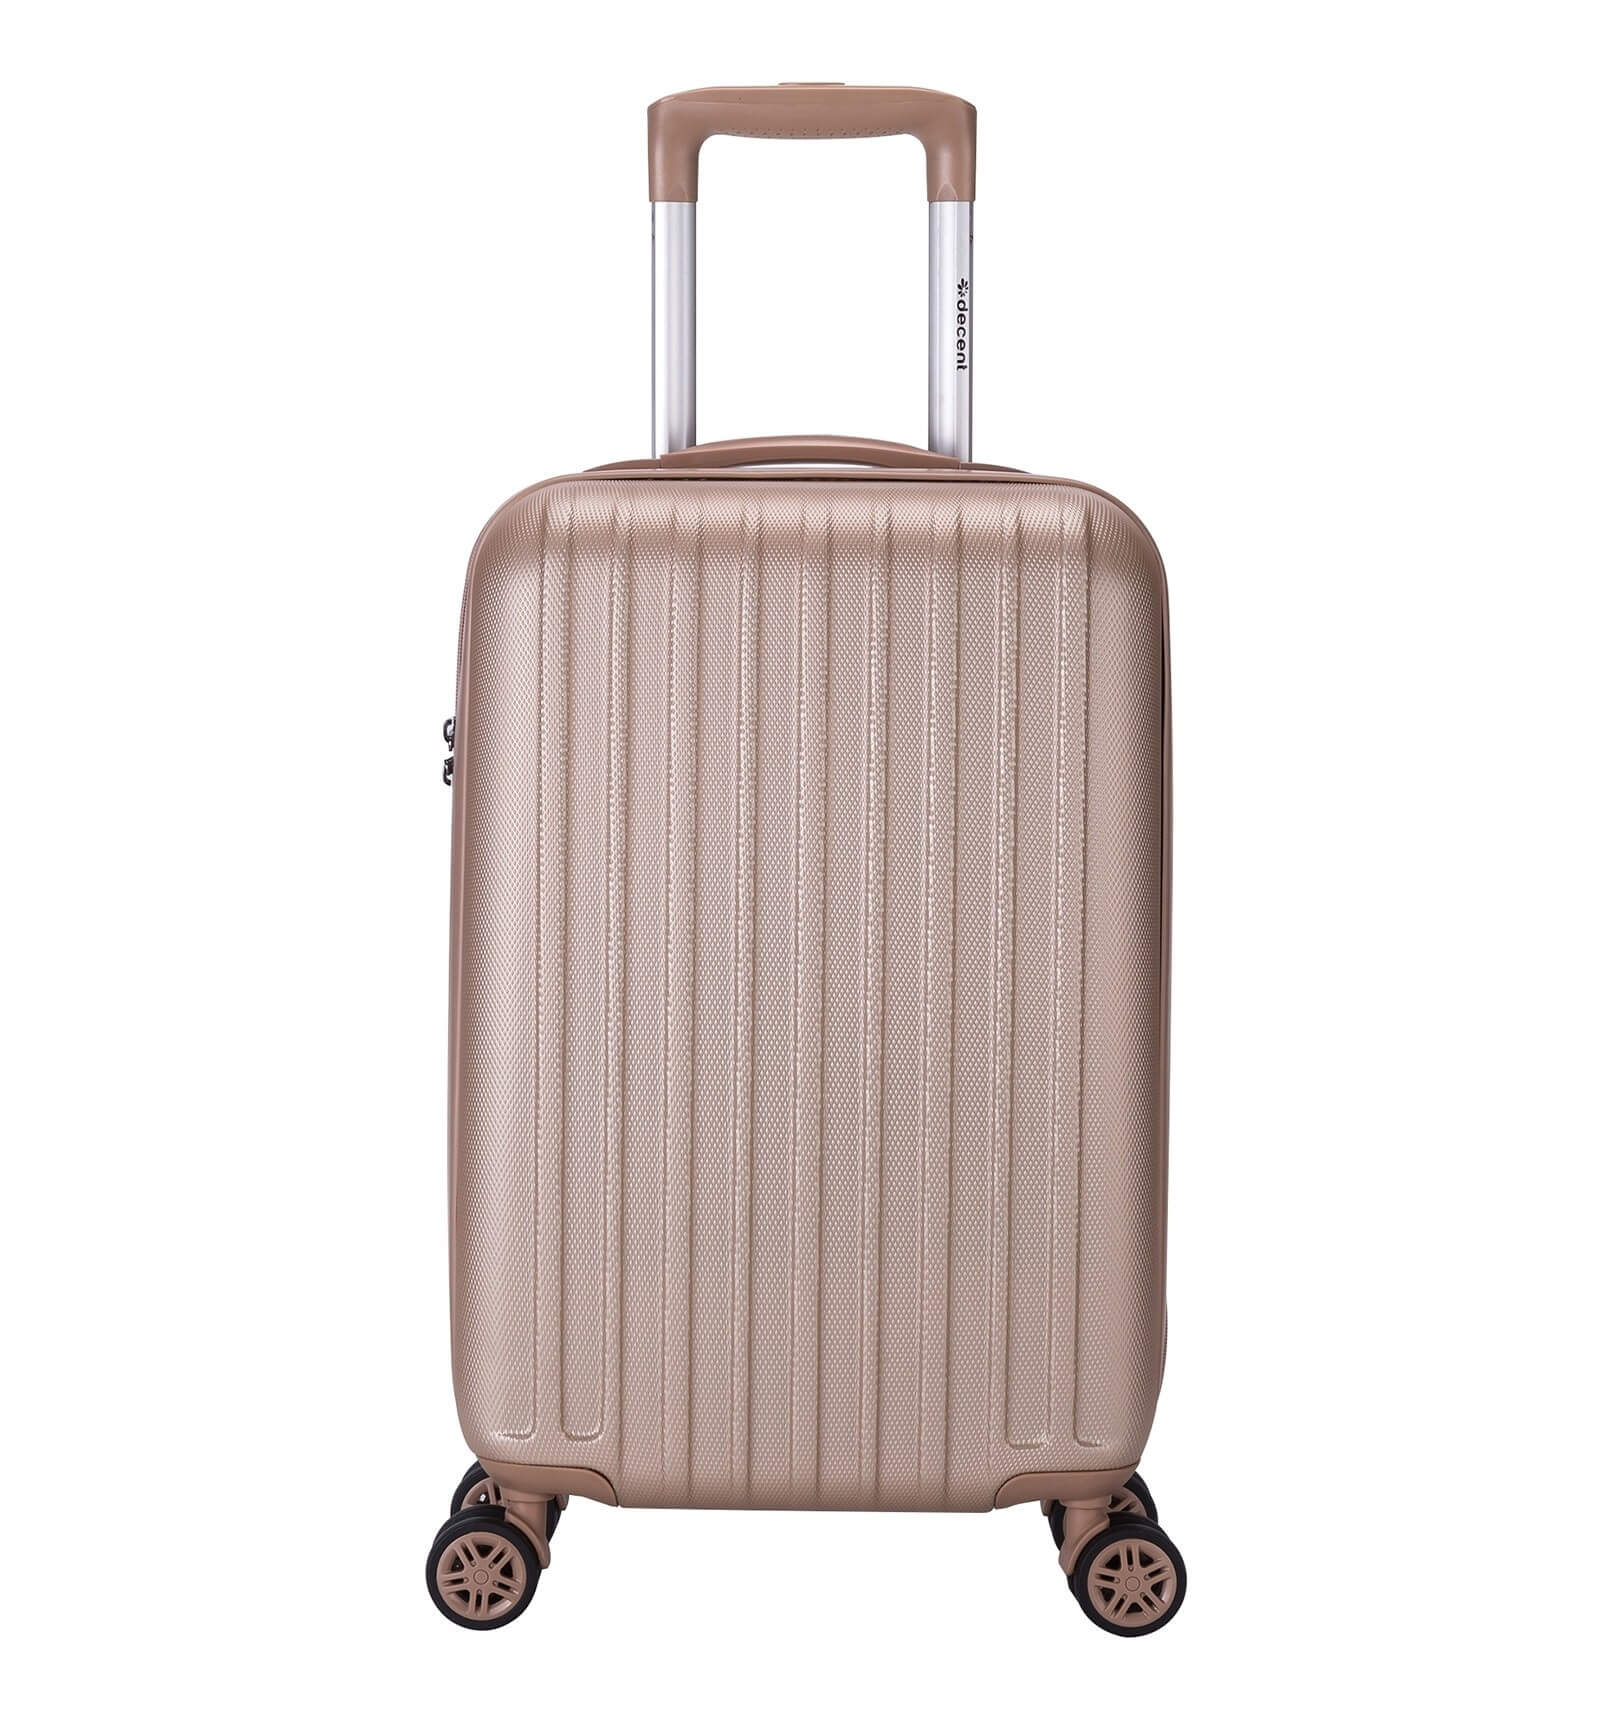 omzeilen kool muur Decent Tranporto-One Handbagage Koffer 55 Zalm | Online Kopen